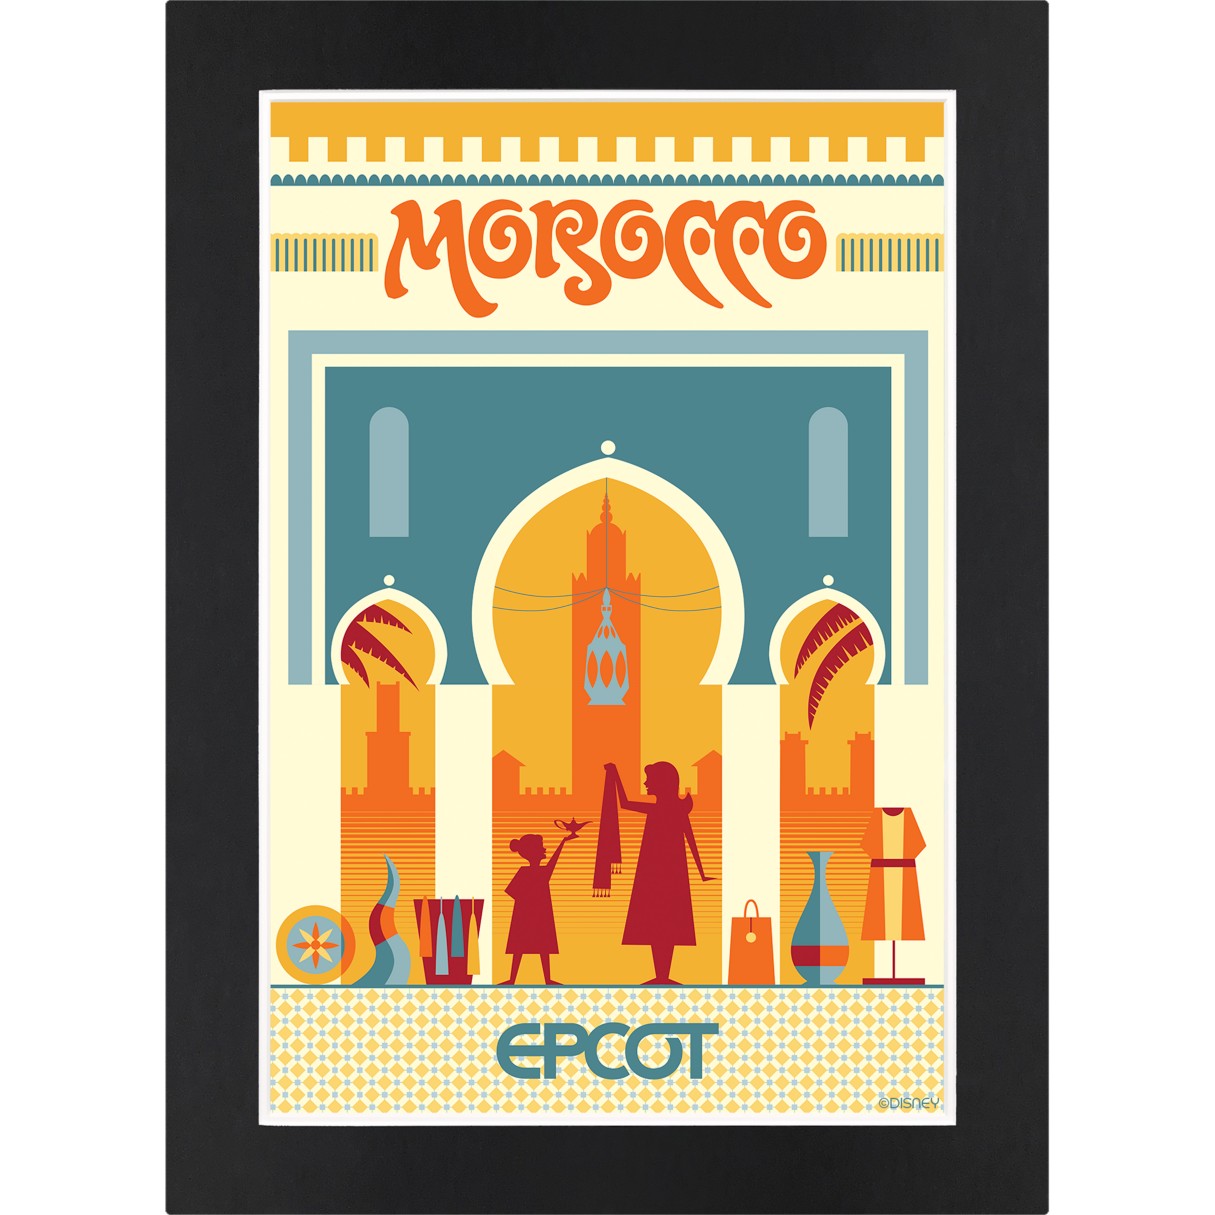 EPCOT Morocco Pavilion Matted Print